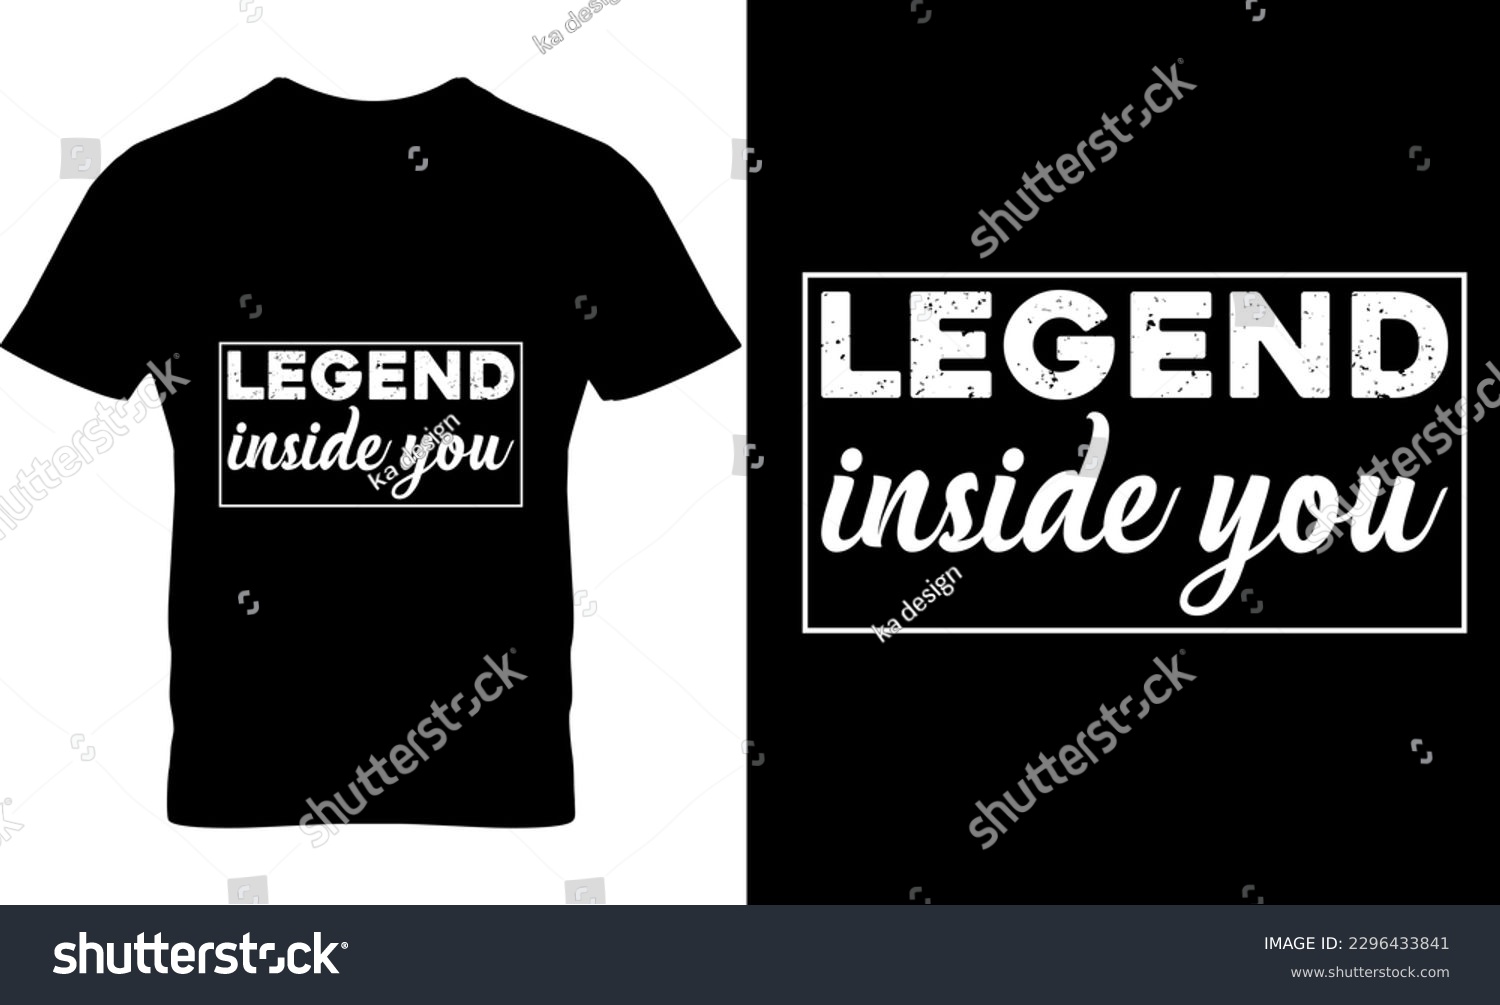 SVG of legend inside you, Graphic, illustration, vector, typography, motivational, inspiration, inspiration t-shirt design, Typography t-shirt design, motivational quotes, motivational t-shirt design, svg